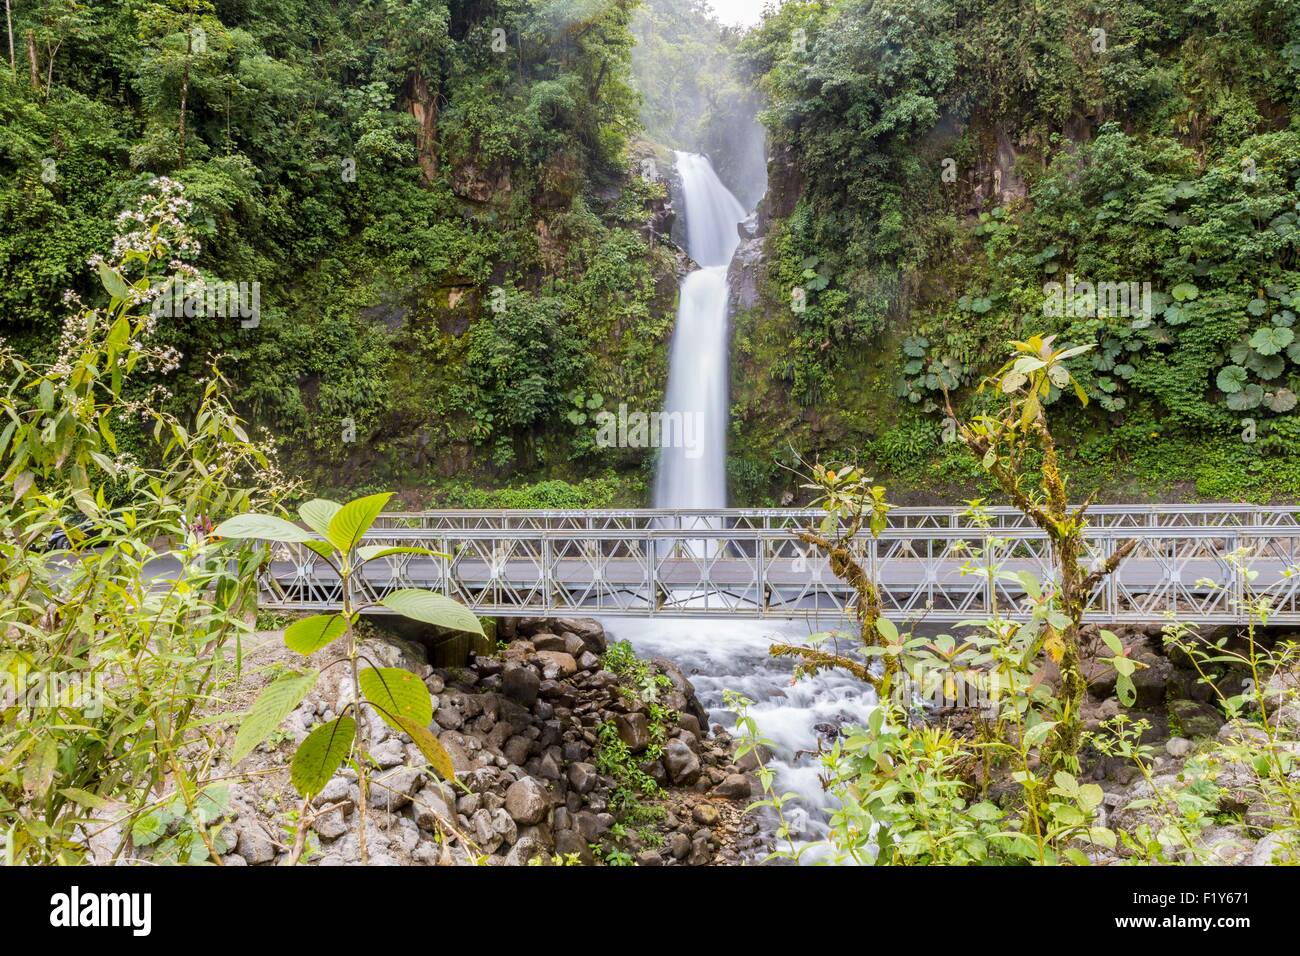 Costa Rica, Alajuela province, Poas Volcano National Park, La Paz Waterfall Stock Photo